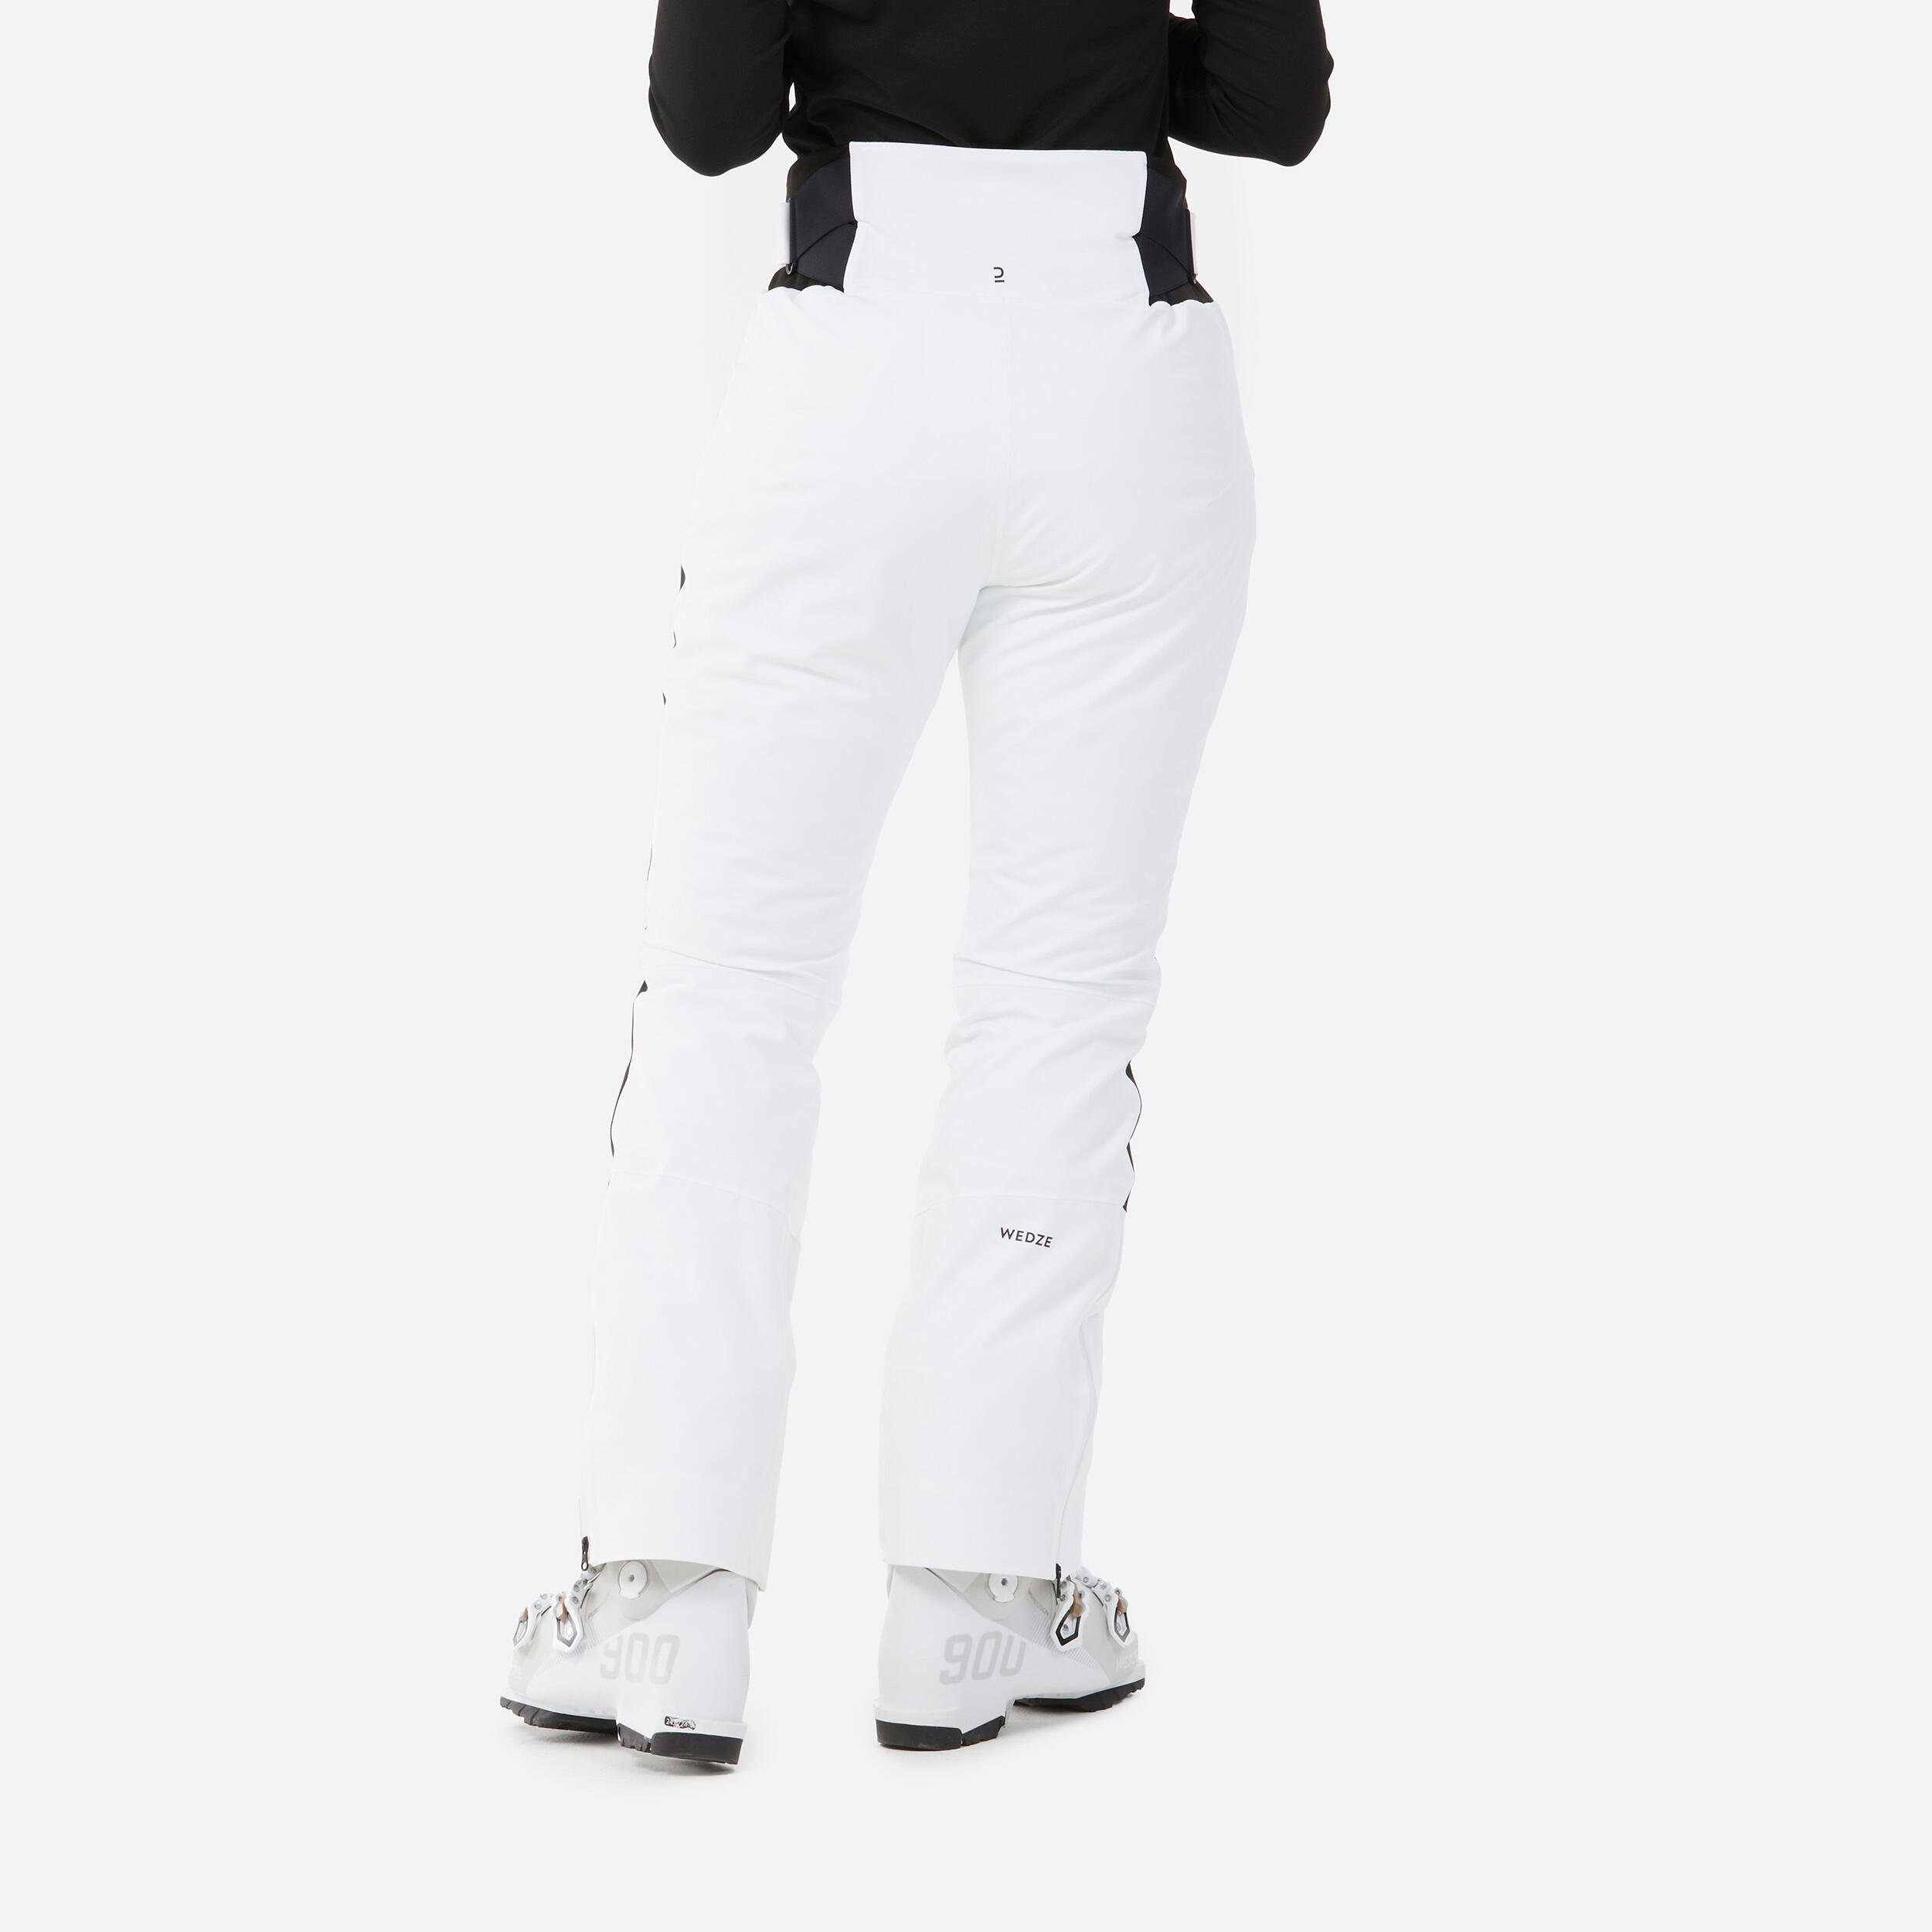 Women’s Ski Trousers 900 - White 5/15